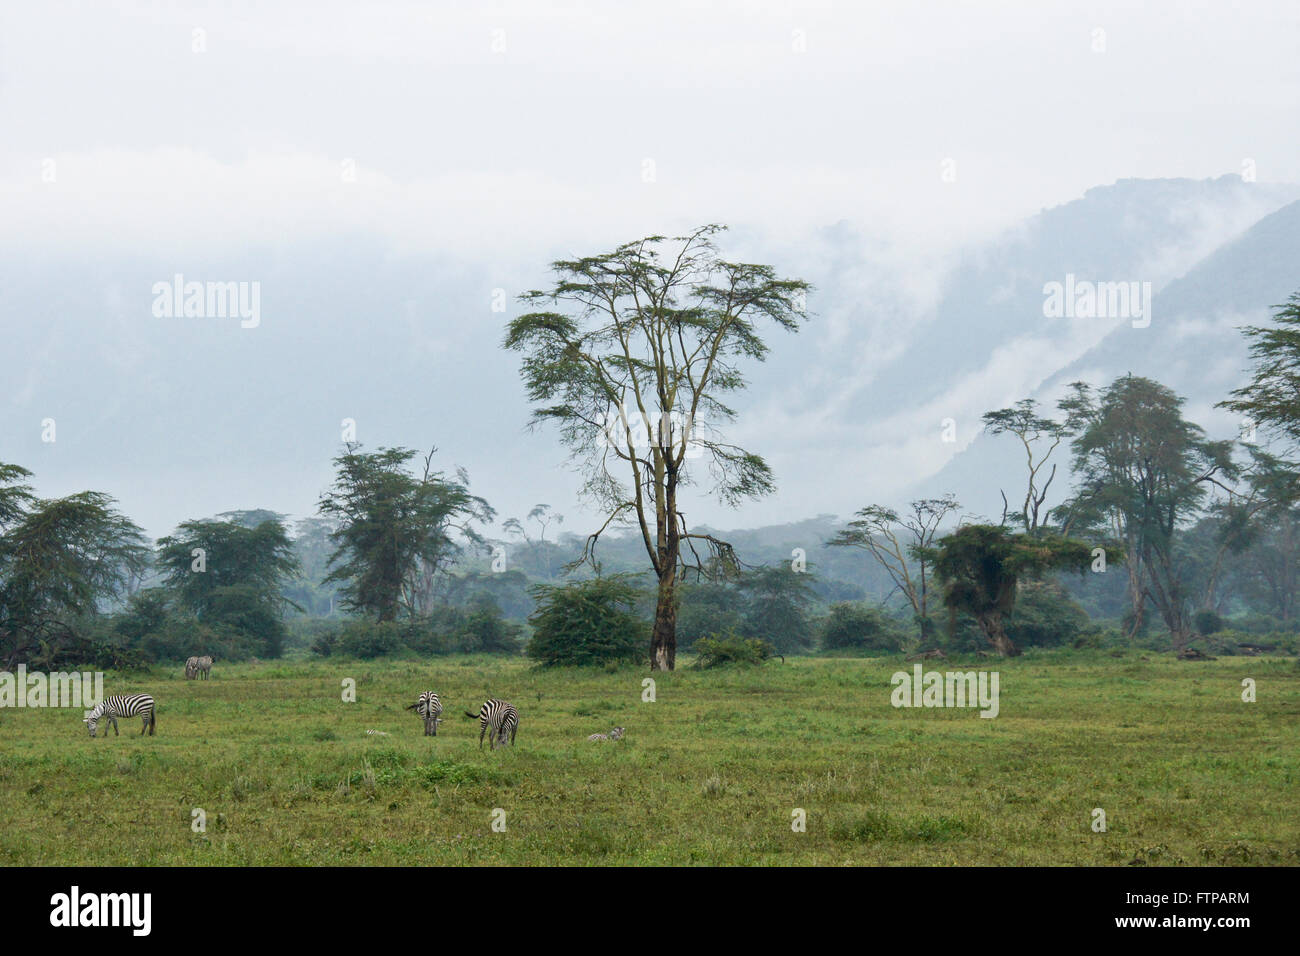 Common zebras grazing at edge of Lerai Forest, Ngorongoro Crater, Tanzania Stock Photo